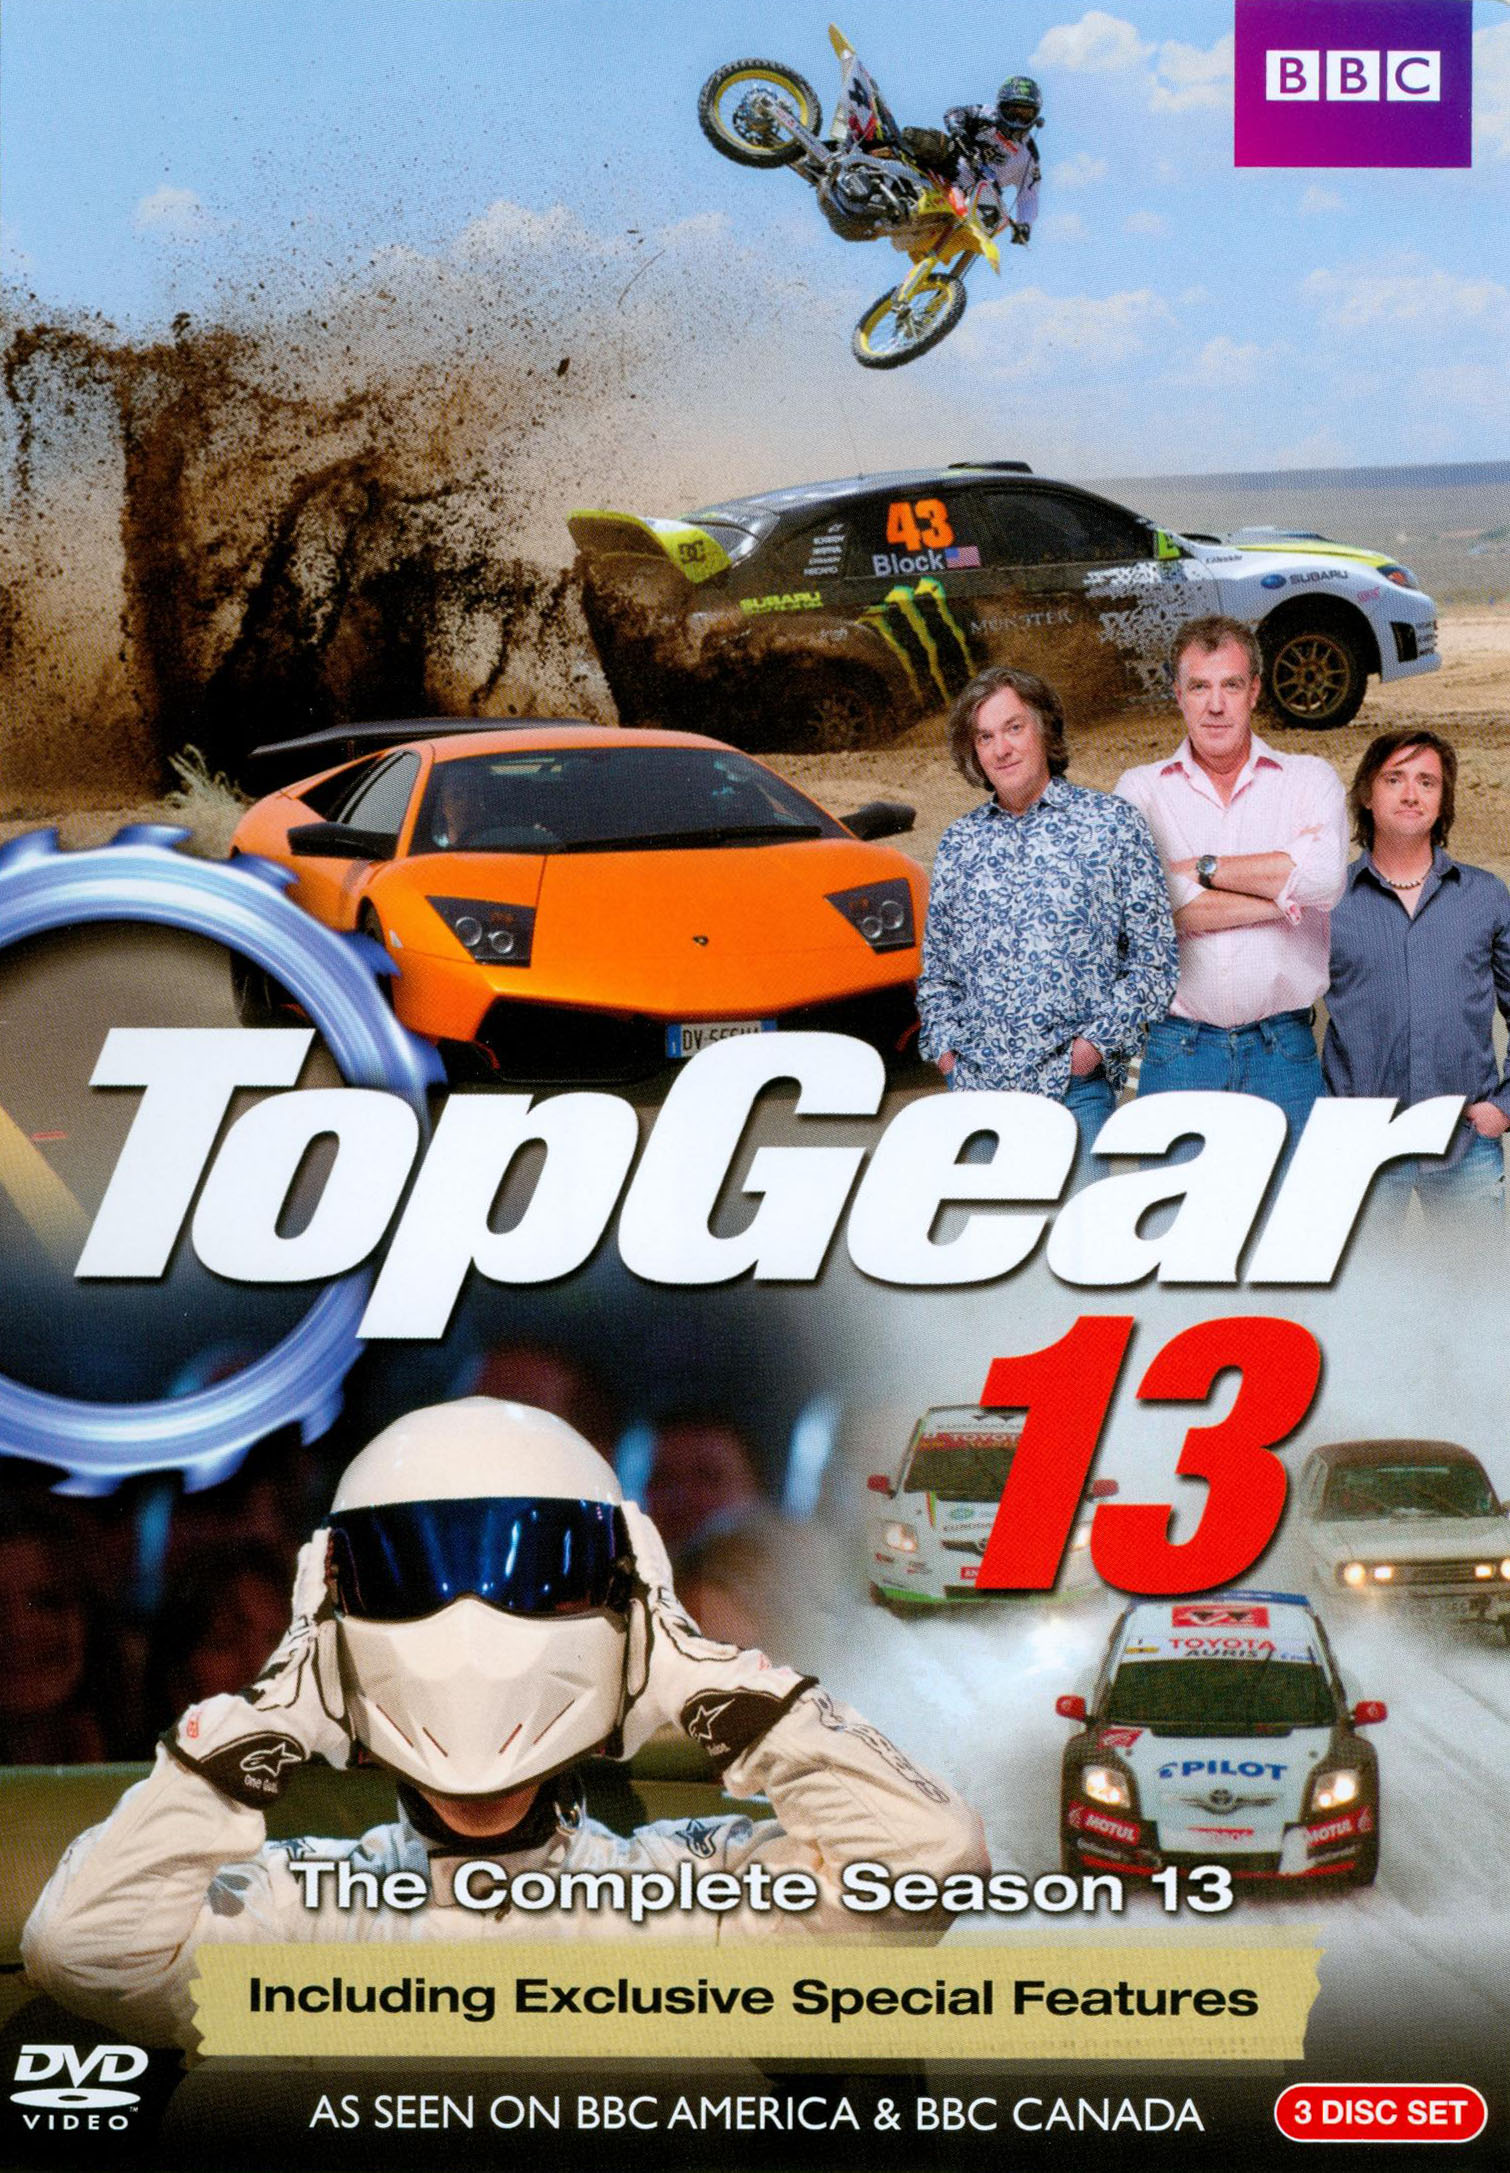 Svane Modtager Indirekte Top Gear: The Complete Season 13 [3 Discs] [DVD] - Best Buy